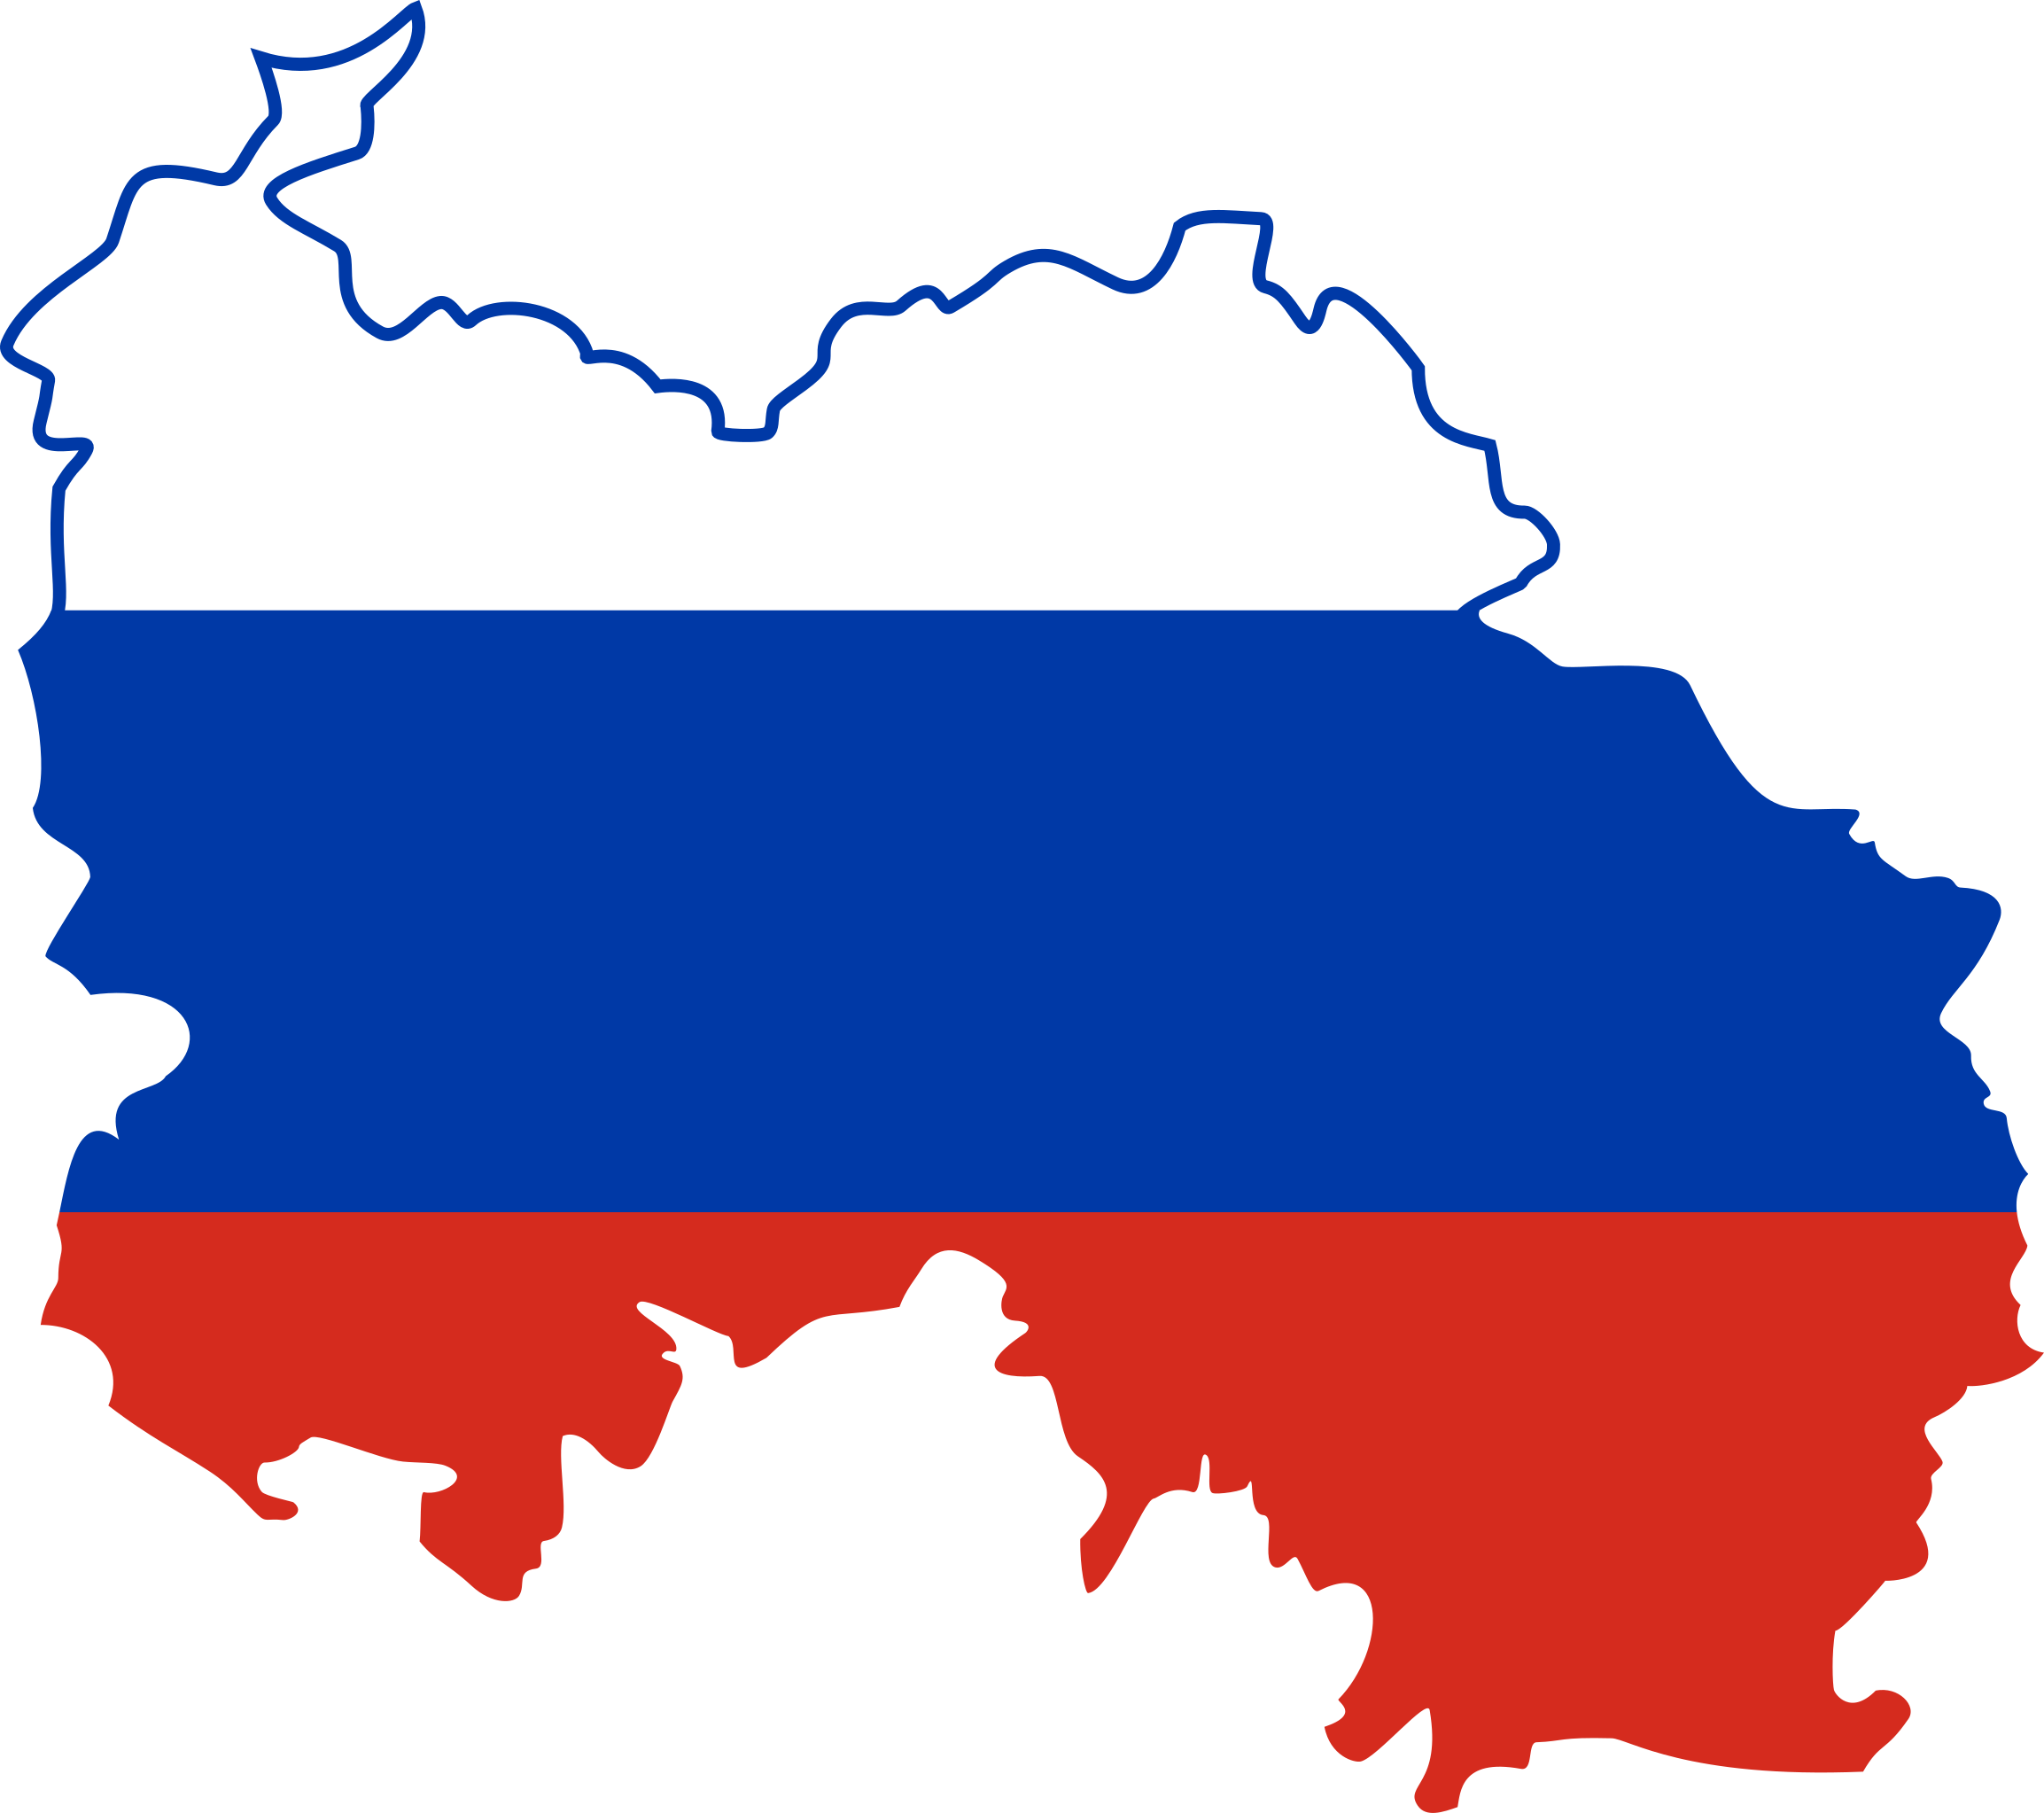 File:Flag of Russia.svg - Wikipedia